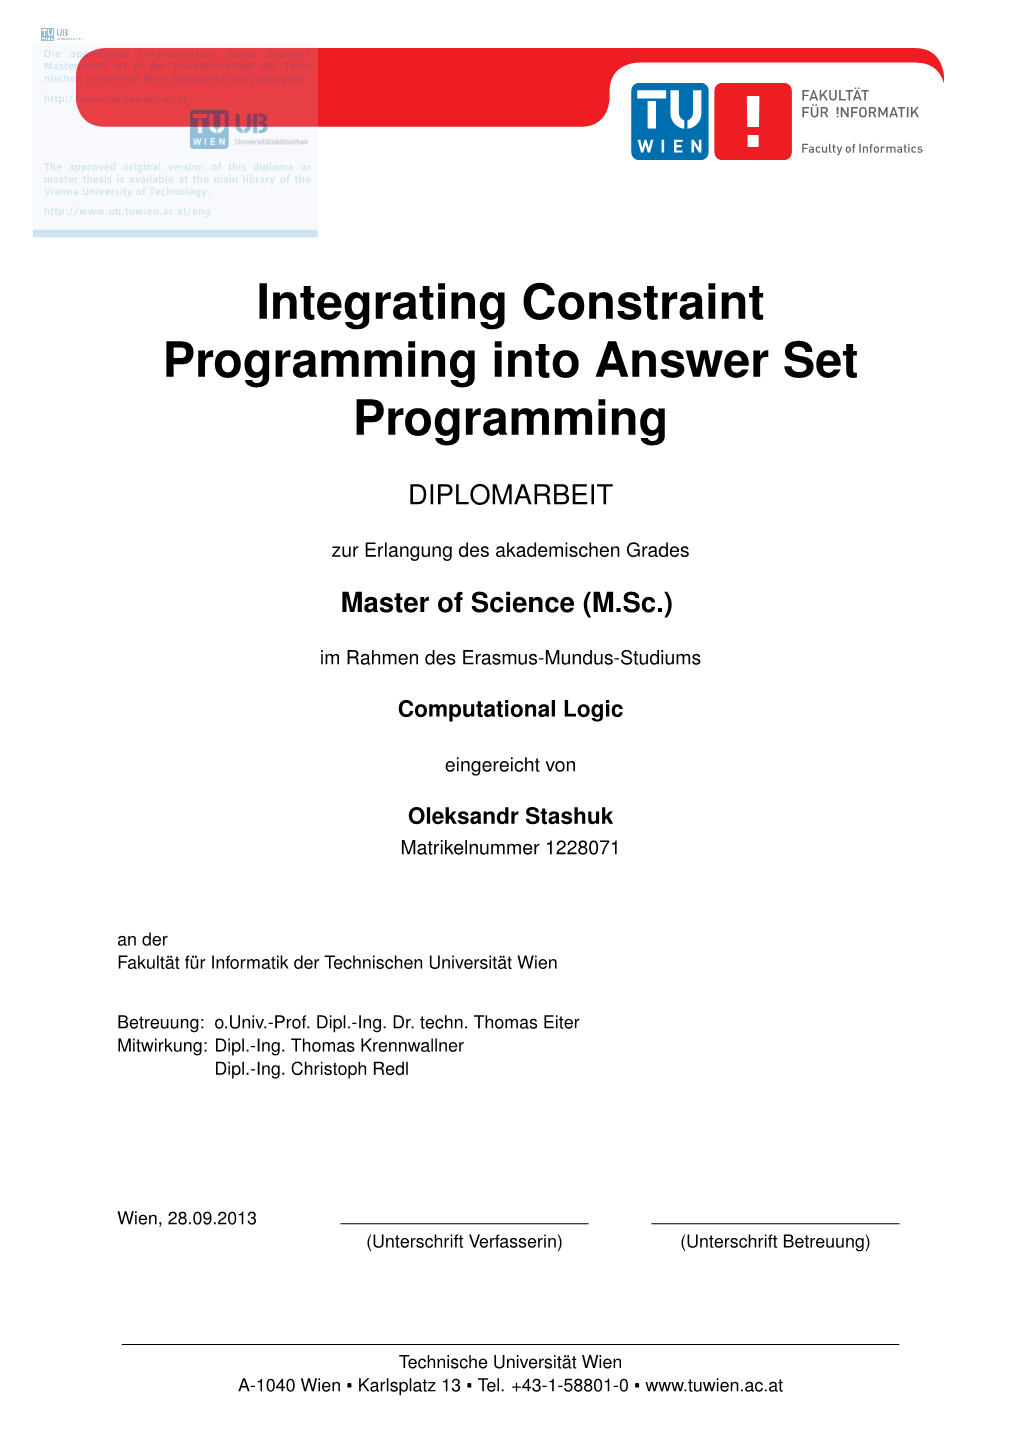 Integrating Constraint Programming Into Answer Set Programming